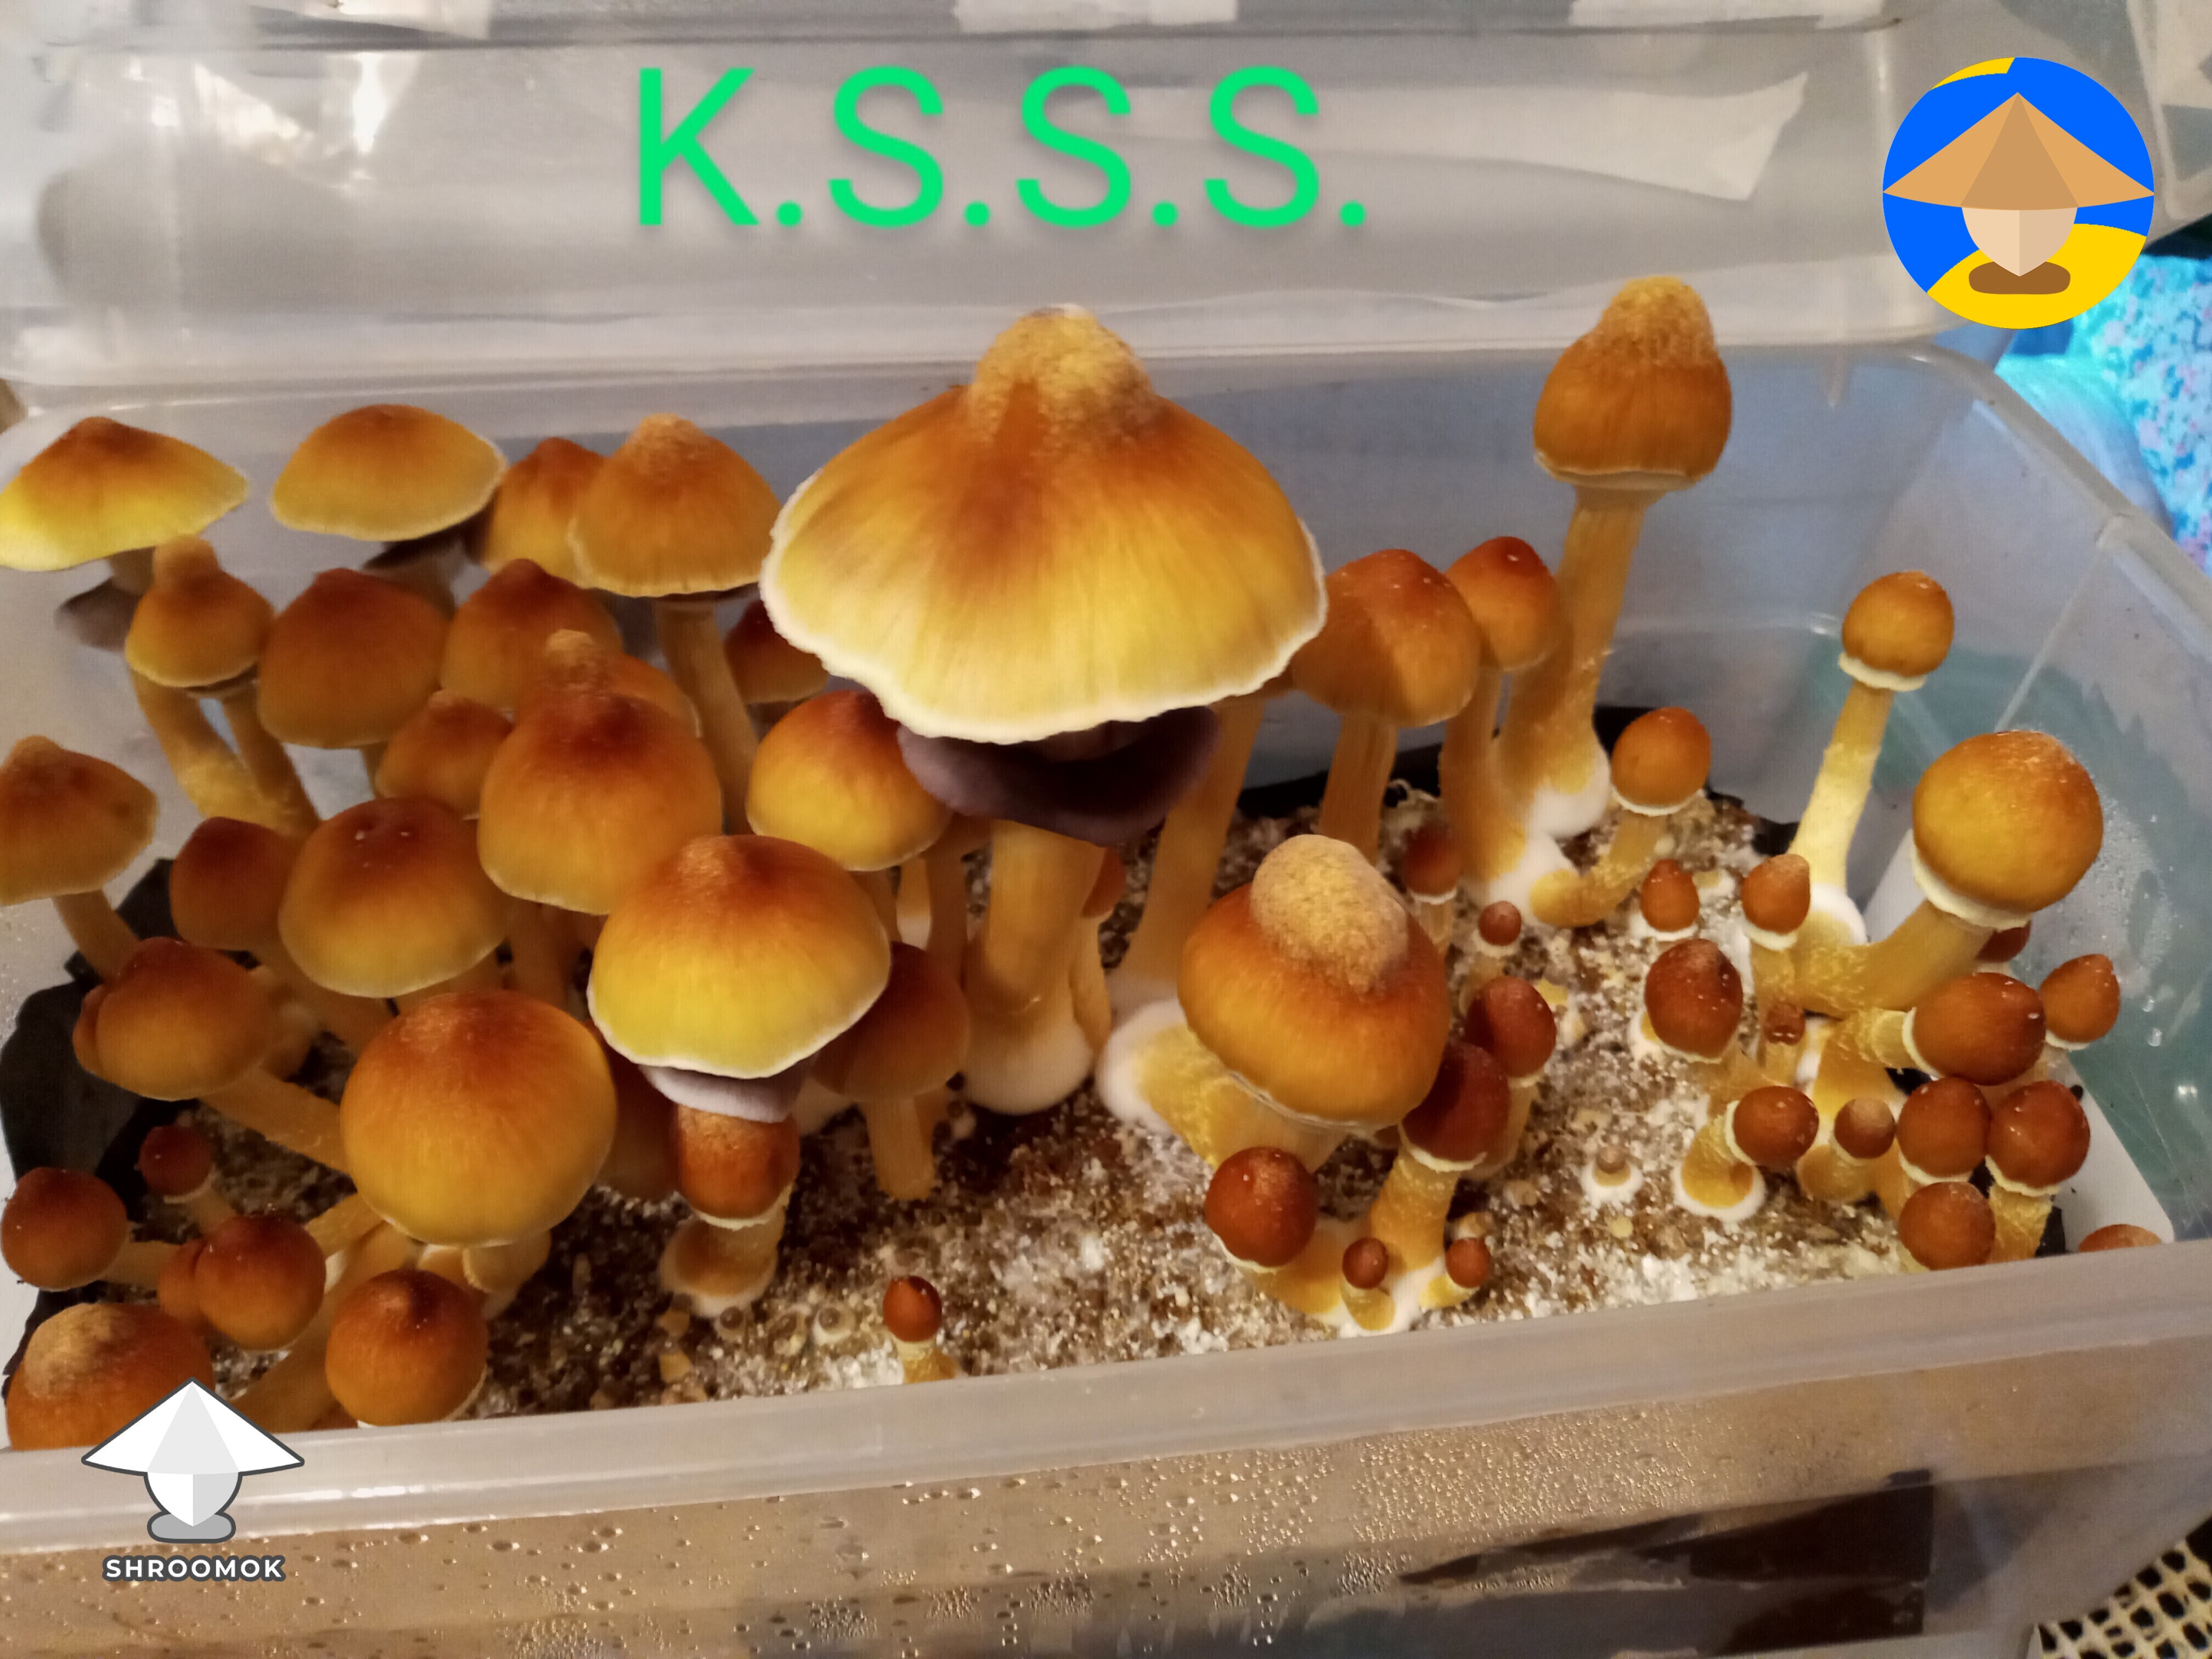 KSSS mushroom fruiting